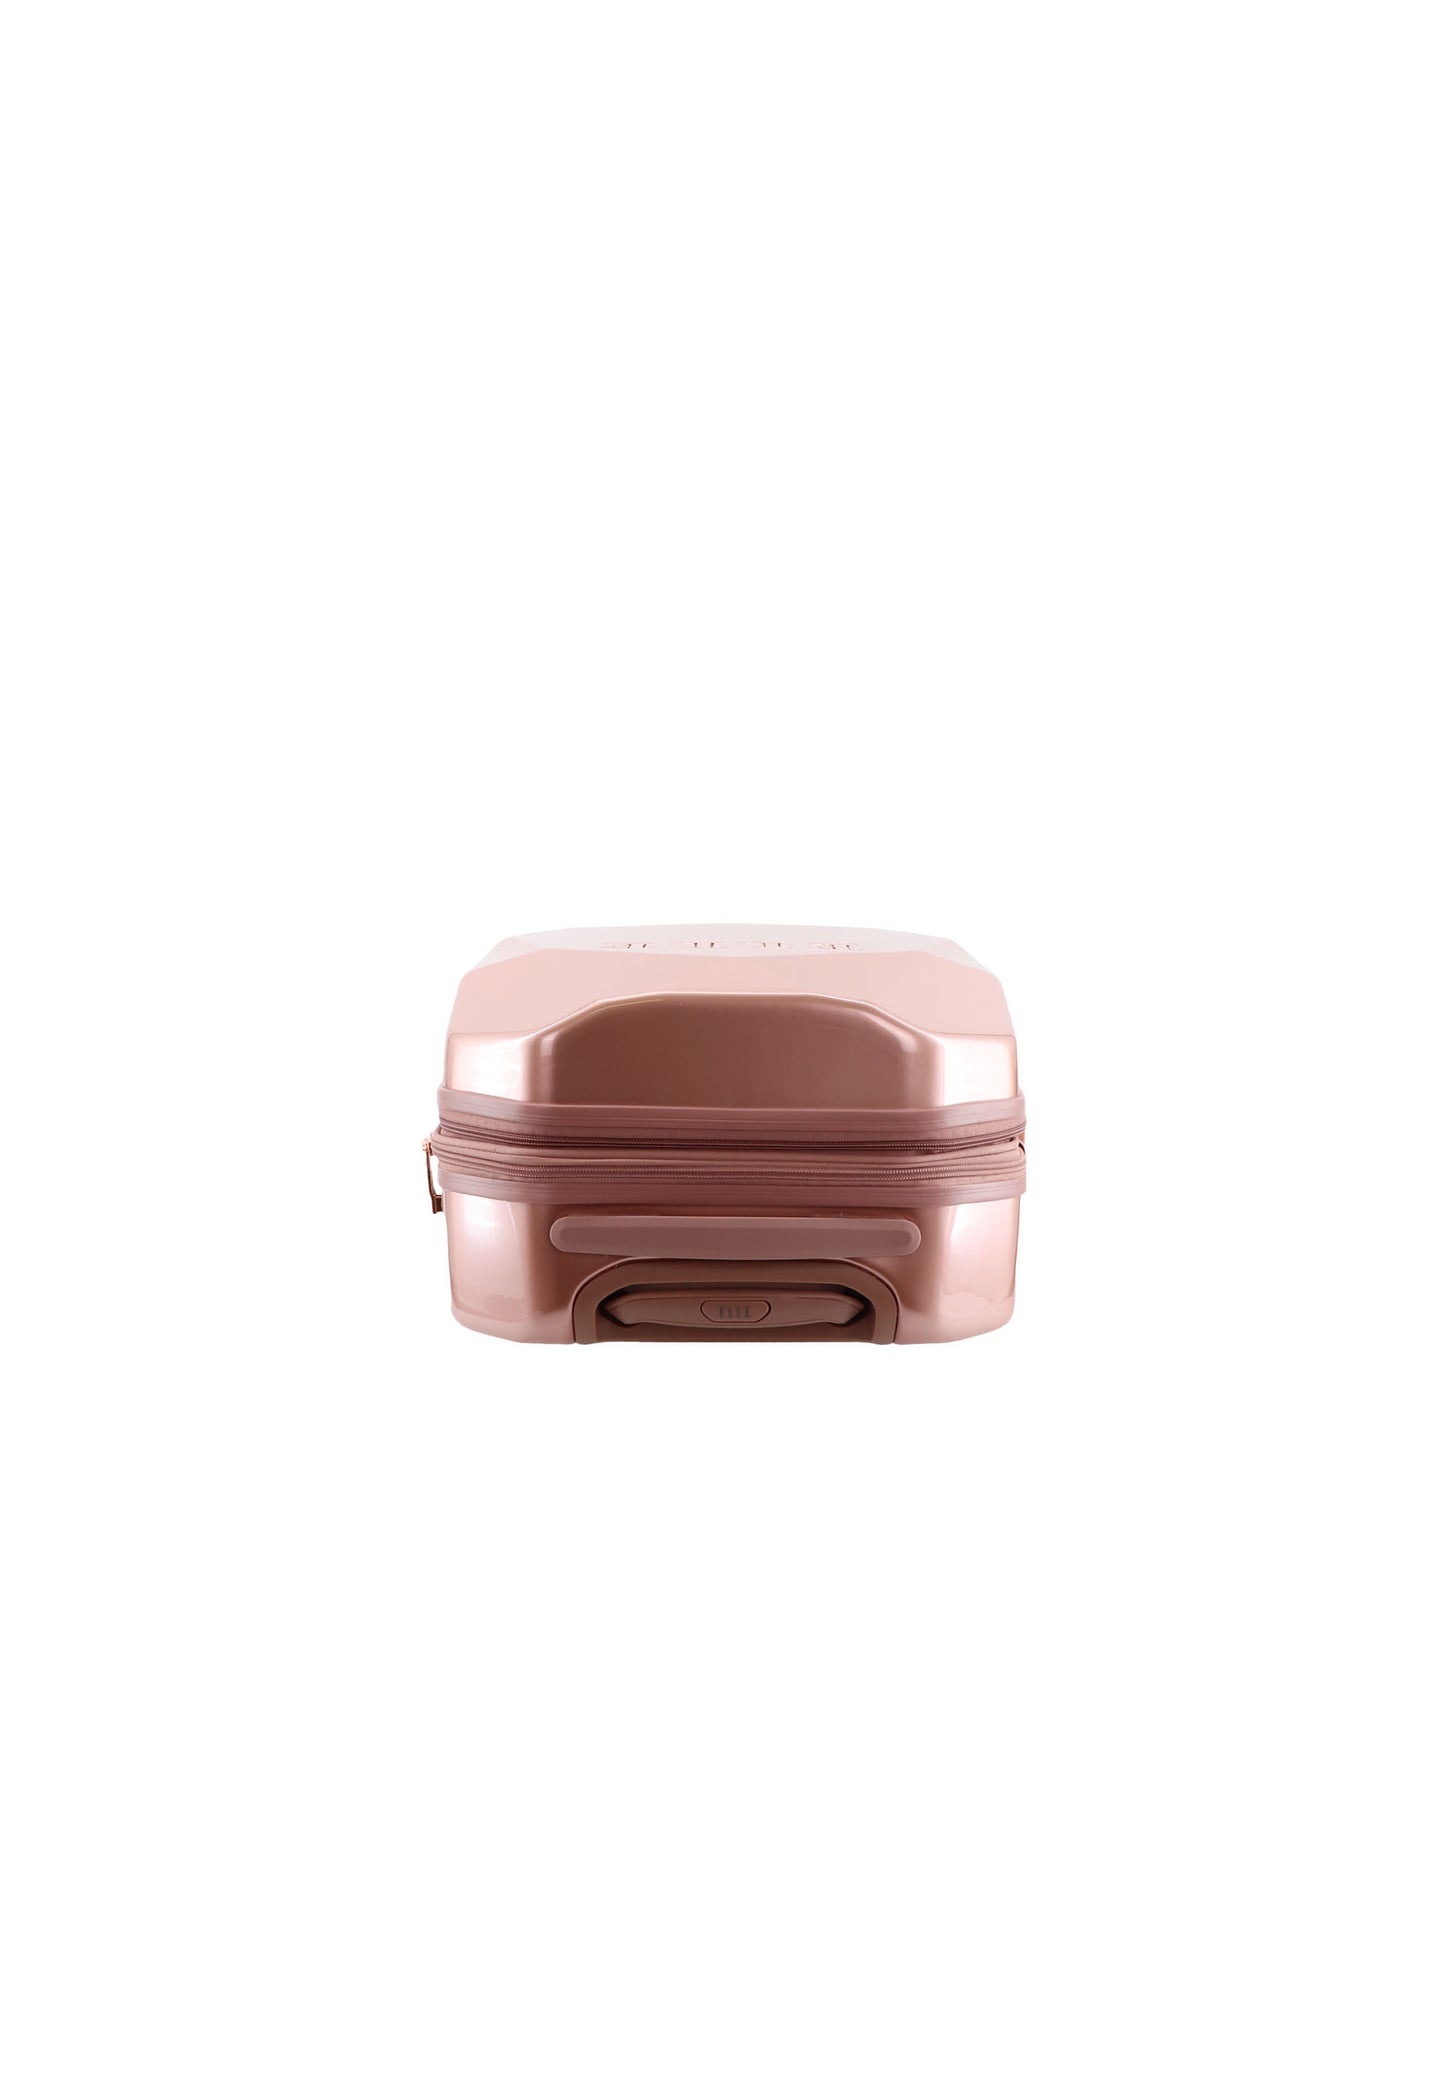 ELLE Diamond Handbagage Harde Koffer / Trolley / Reiskoffer - 56.5 cm (Small) - Rosé goud